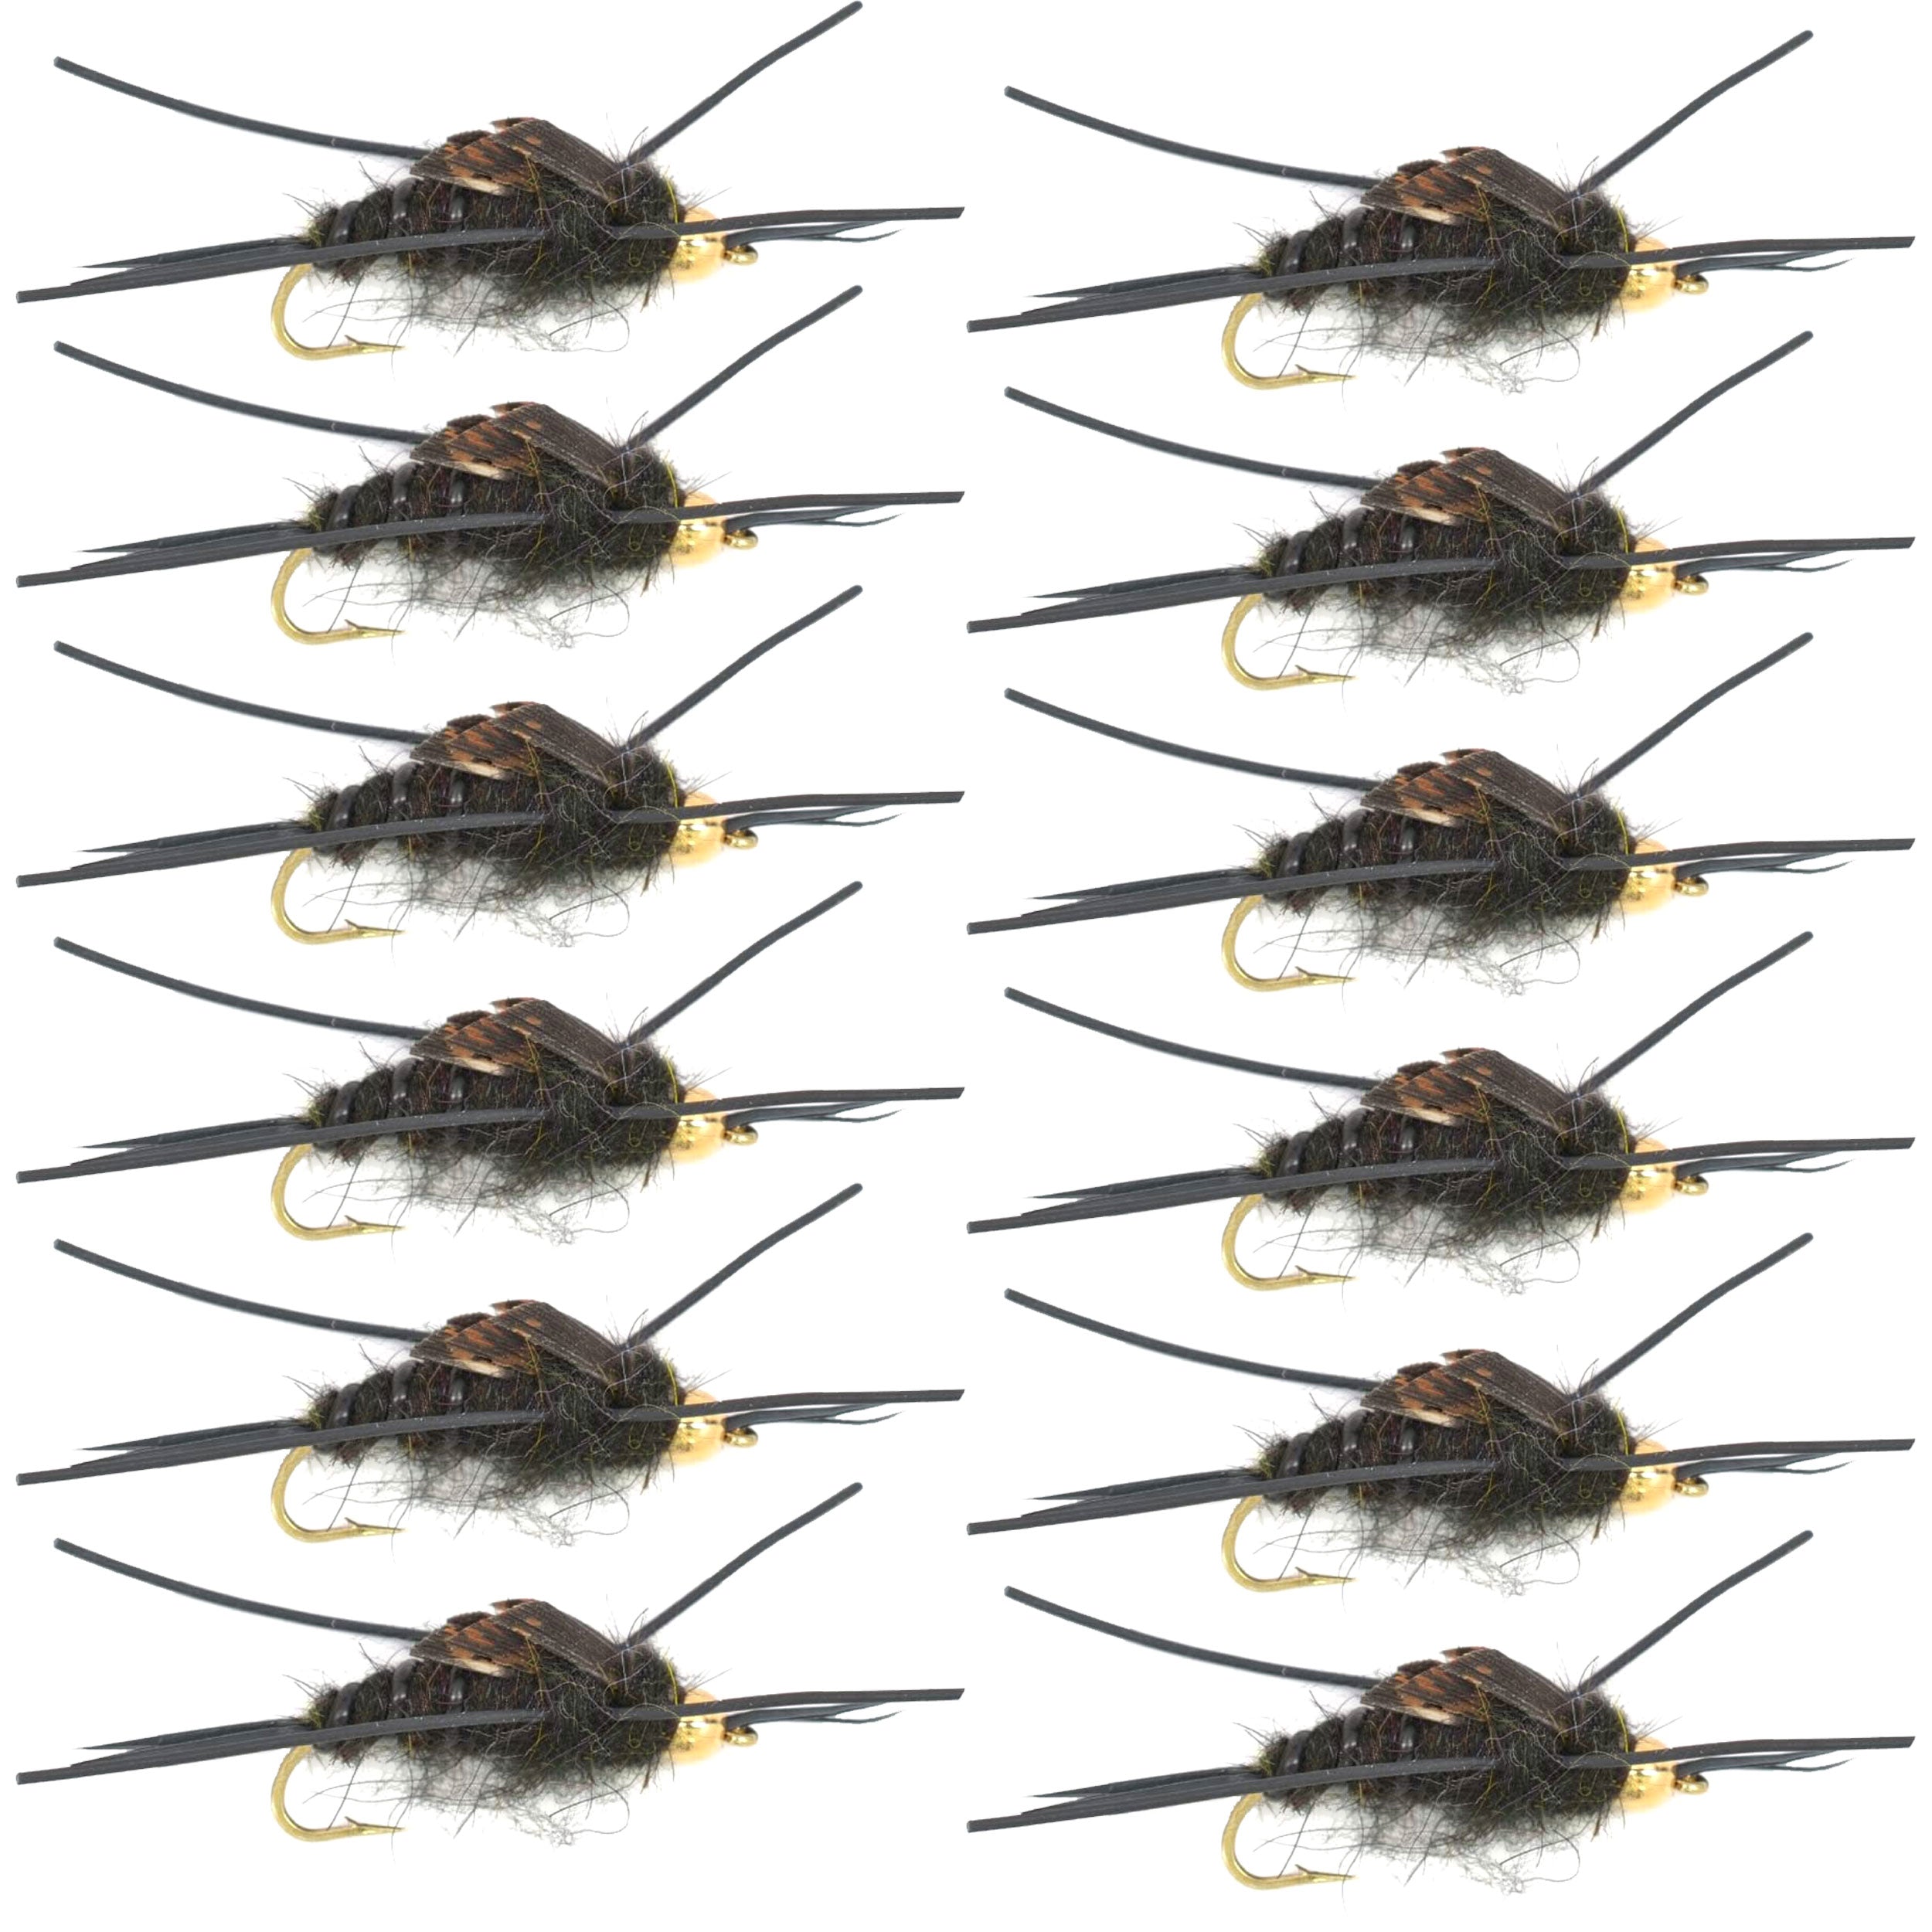 Tungsten Bead Kaufmann's Black Stone Fly with Rubber Legs - Stonefly Wet Fly - 1 Dozen Flies Hook Size 8